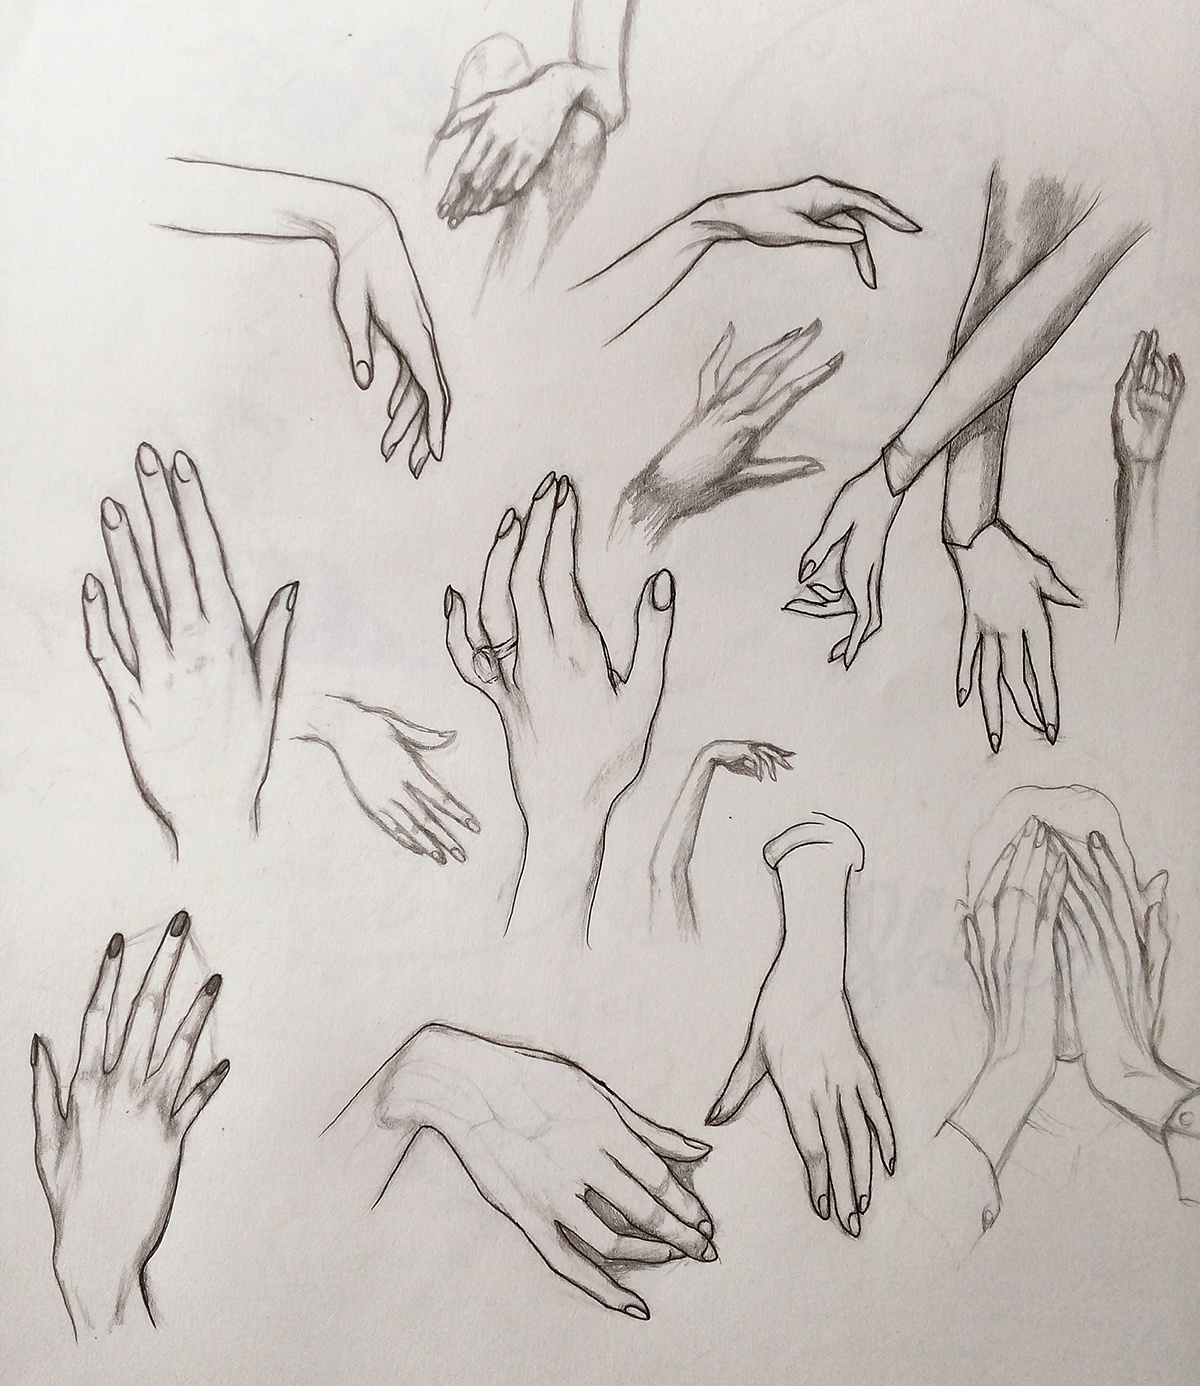 ILLUSTRATION  Finearts hands beauty women gestures study human body pencils